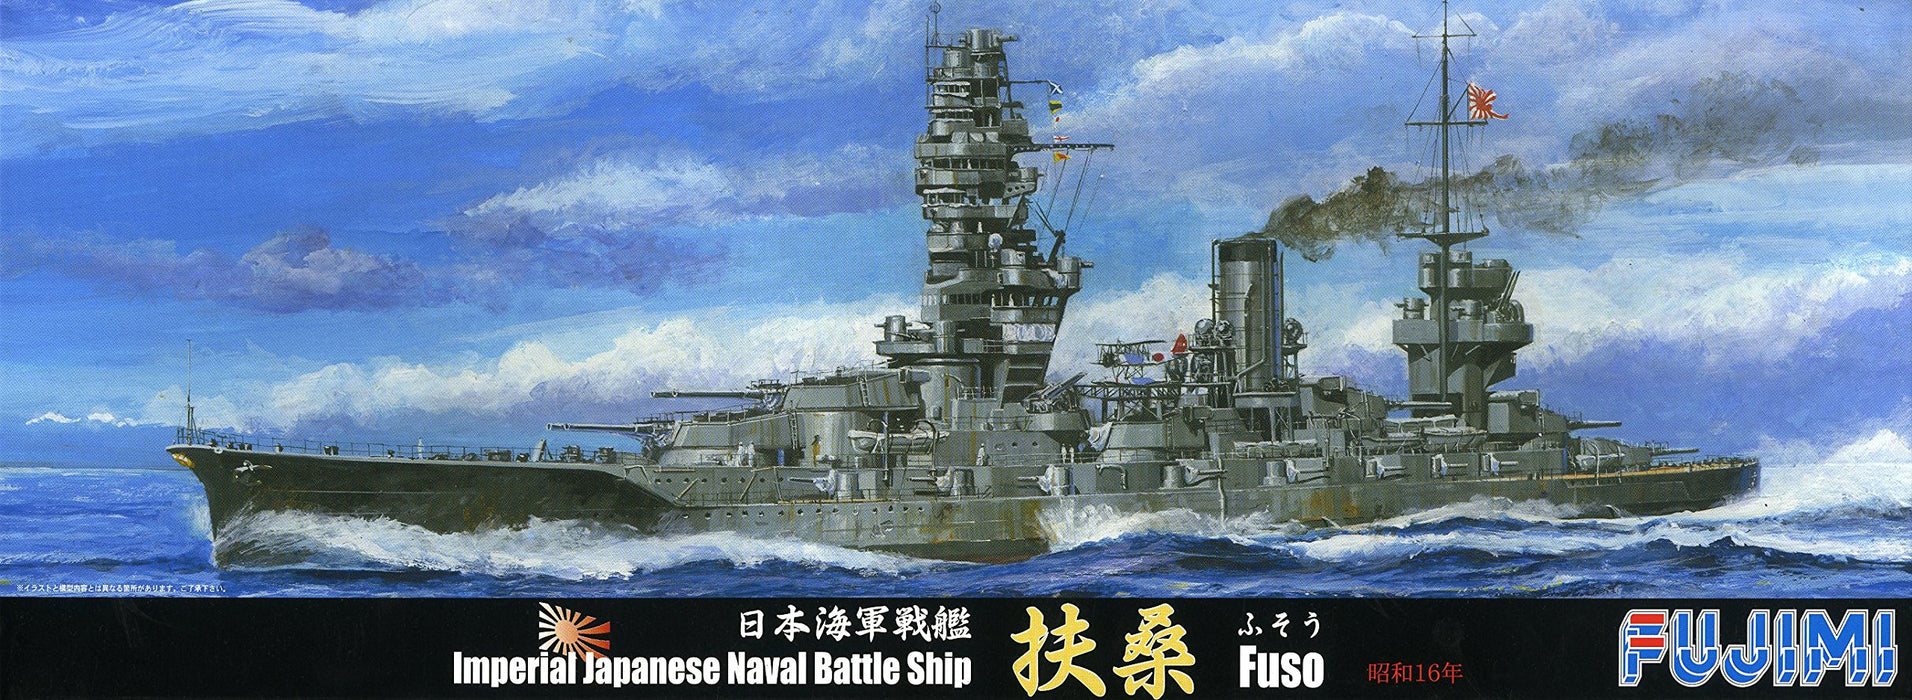 FUJIMI Toku-66 Ijn Imperial Japanese Naval Battle Ship Fuso 1941 1/700 Scale Kit